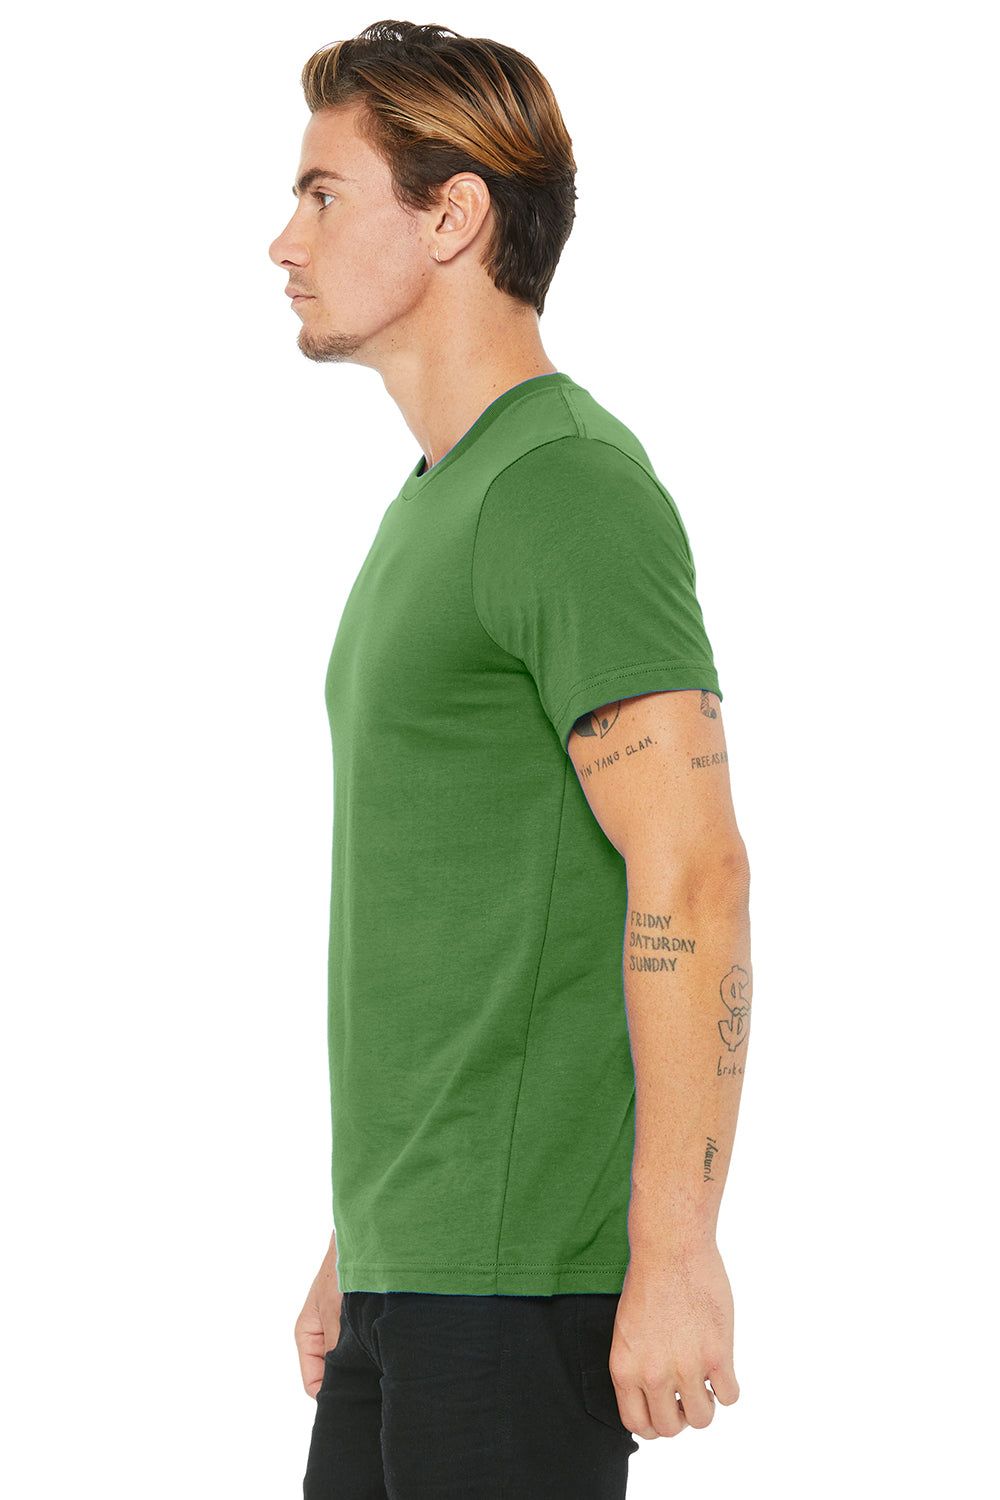 Bella + Canvas 3001U/3001USA Mens USA Made Jersey Short Sleeve Crewneck T-Shirt Leaf Green Model Side